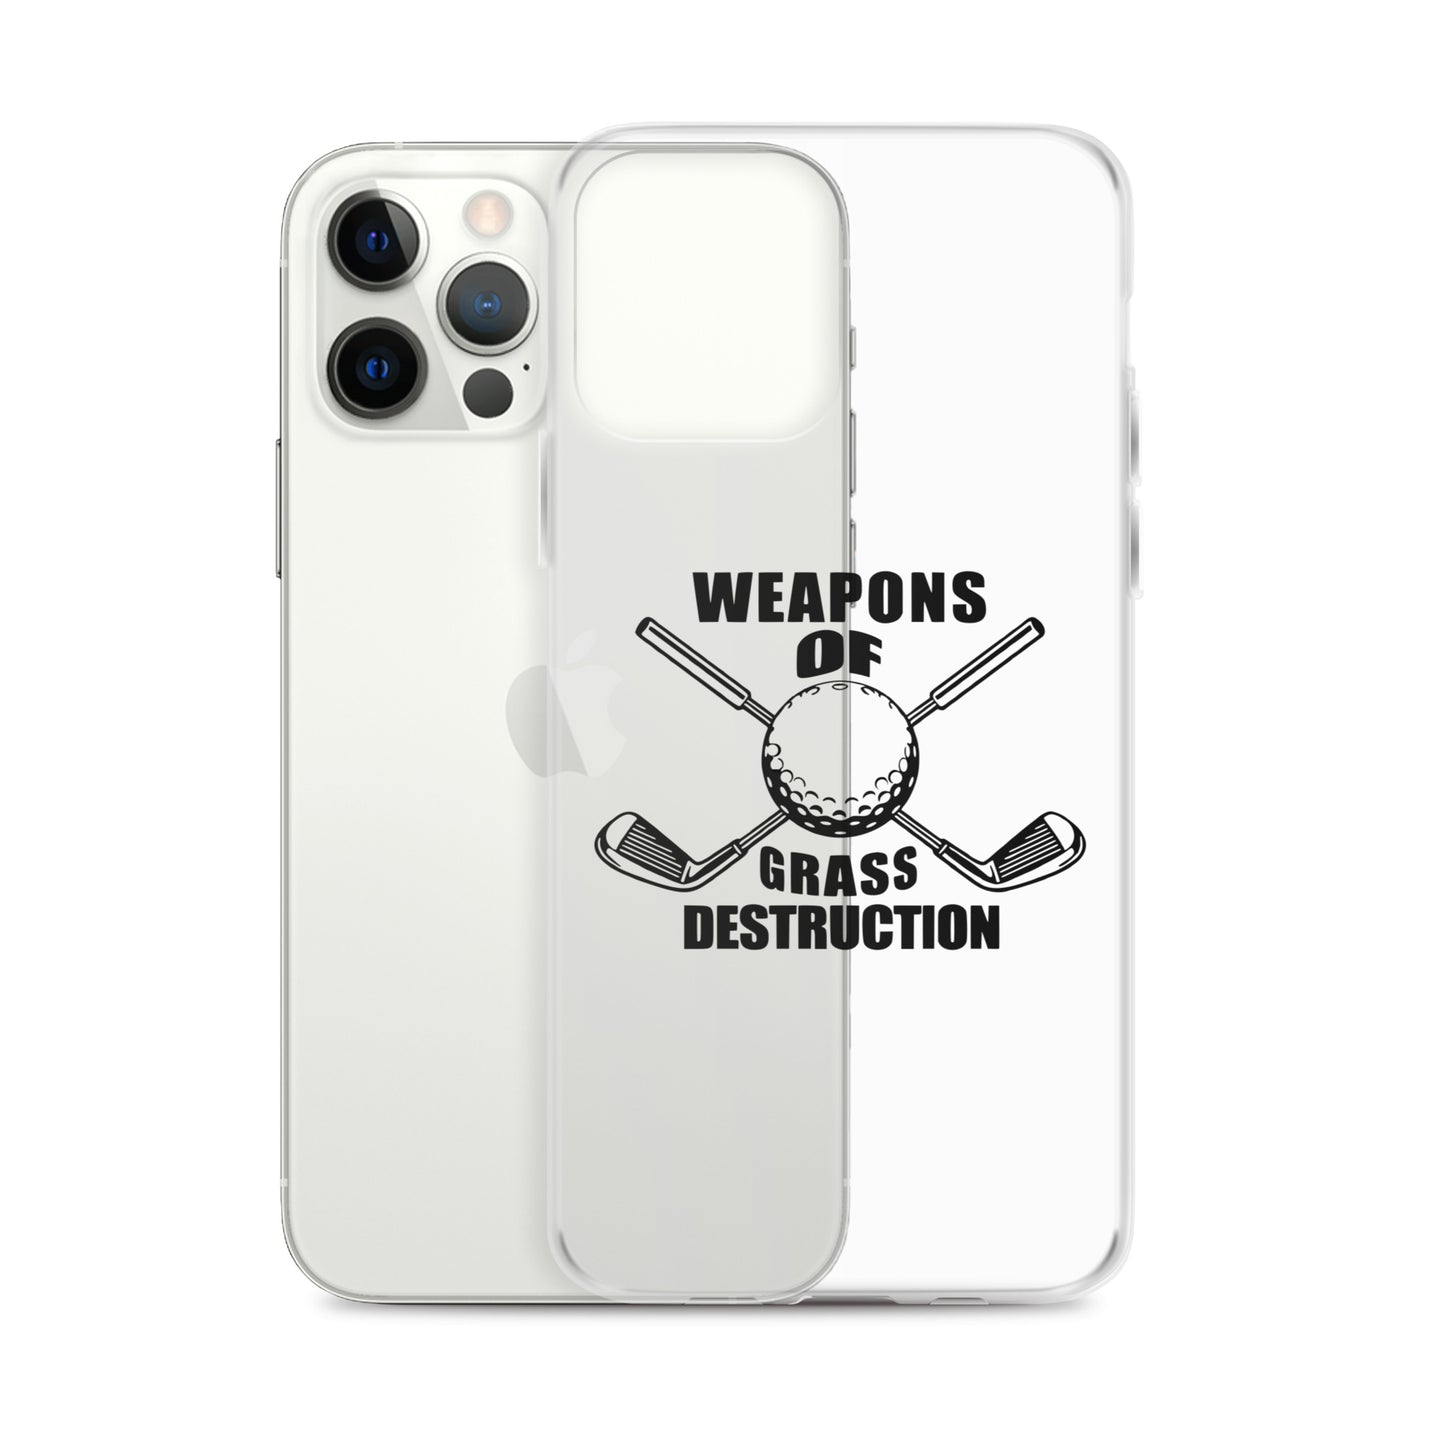 Weapons of Grass Destruction iPhone Case